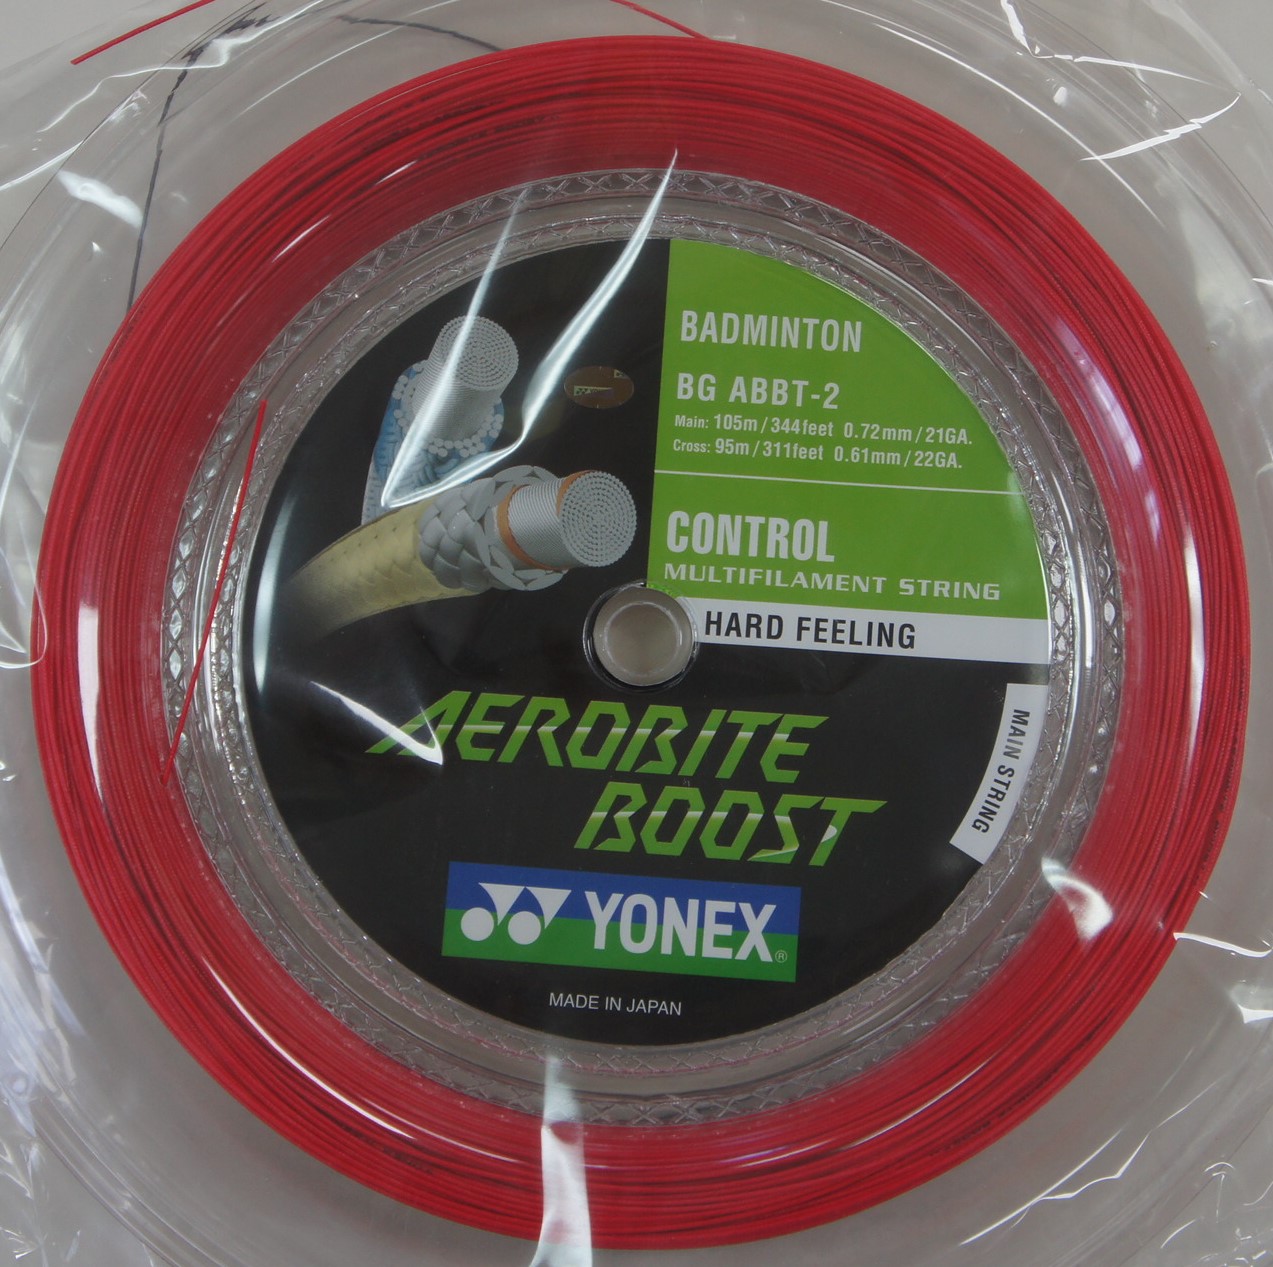 YONEX Aerobite Boost Badminton String 200m coil, Gray/Red